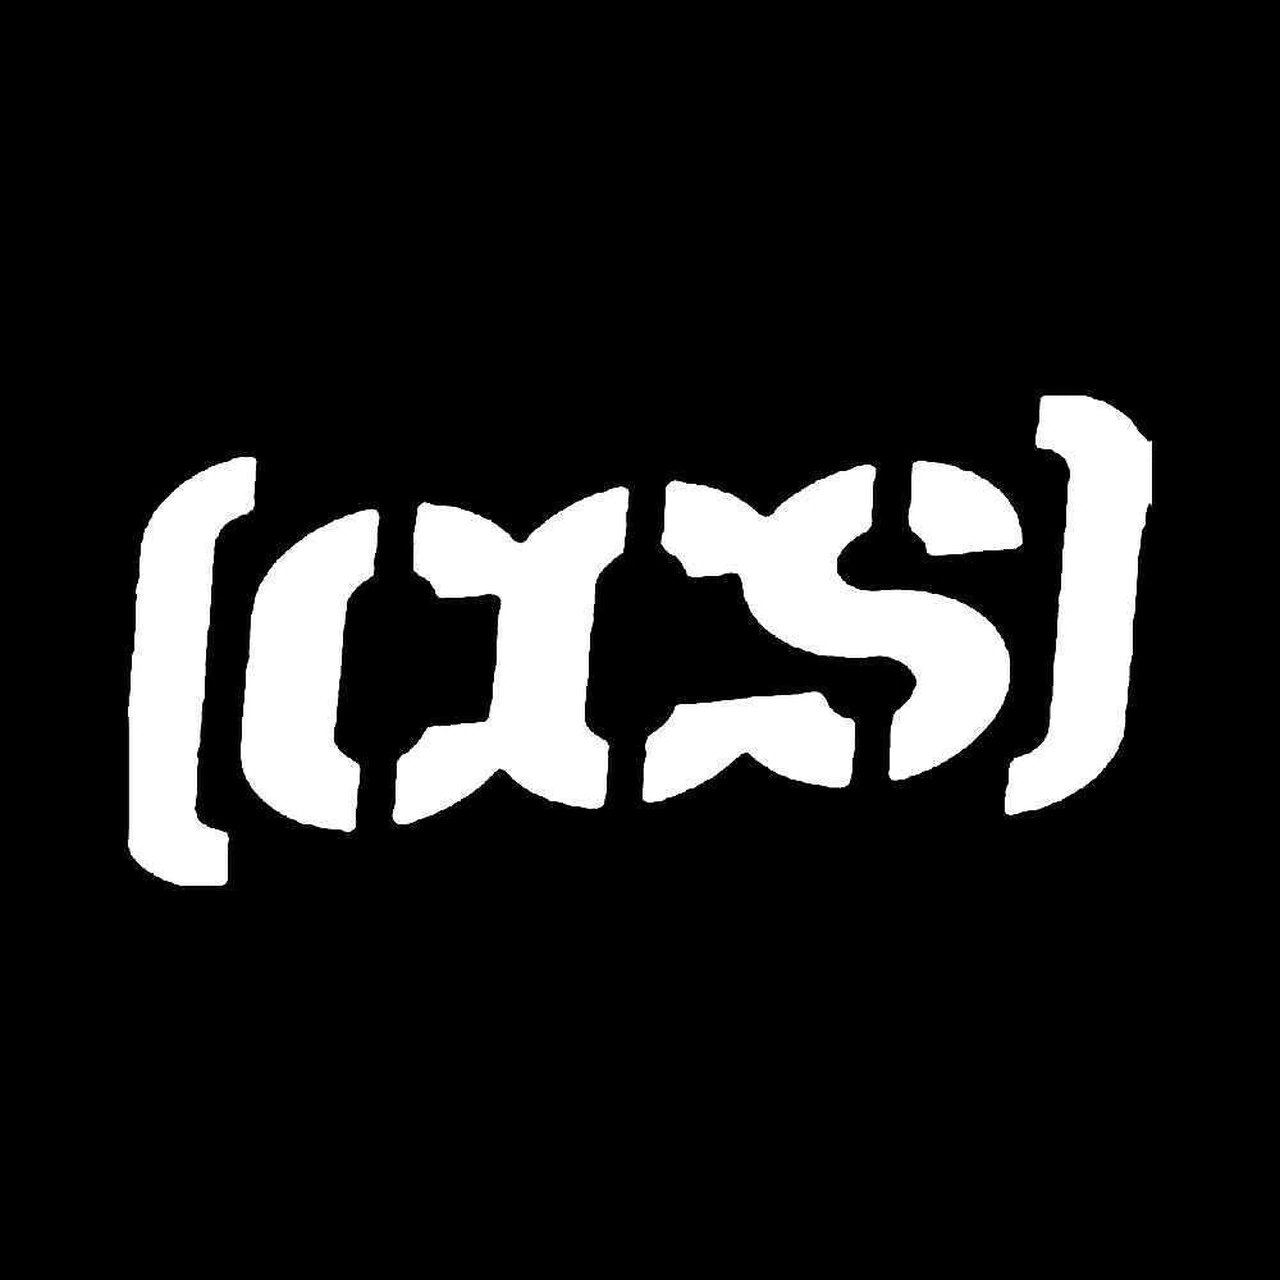 CCS logo and branding design - Diane Higgins Design